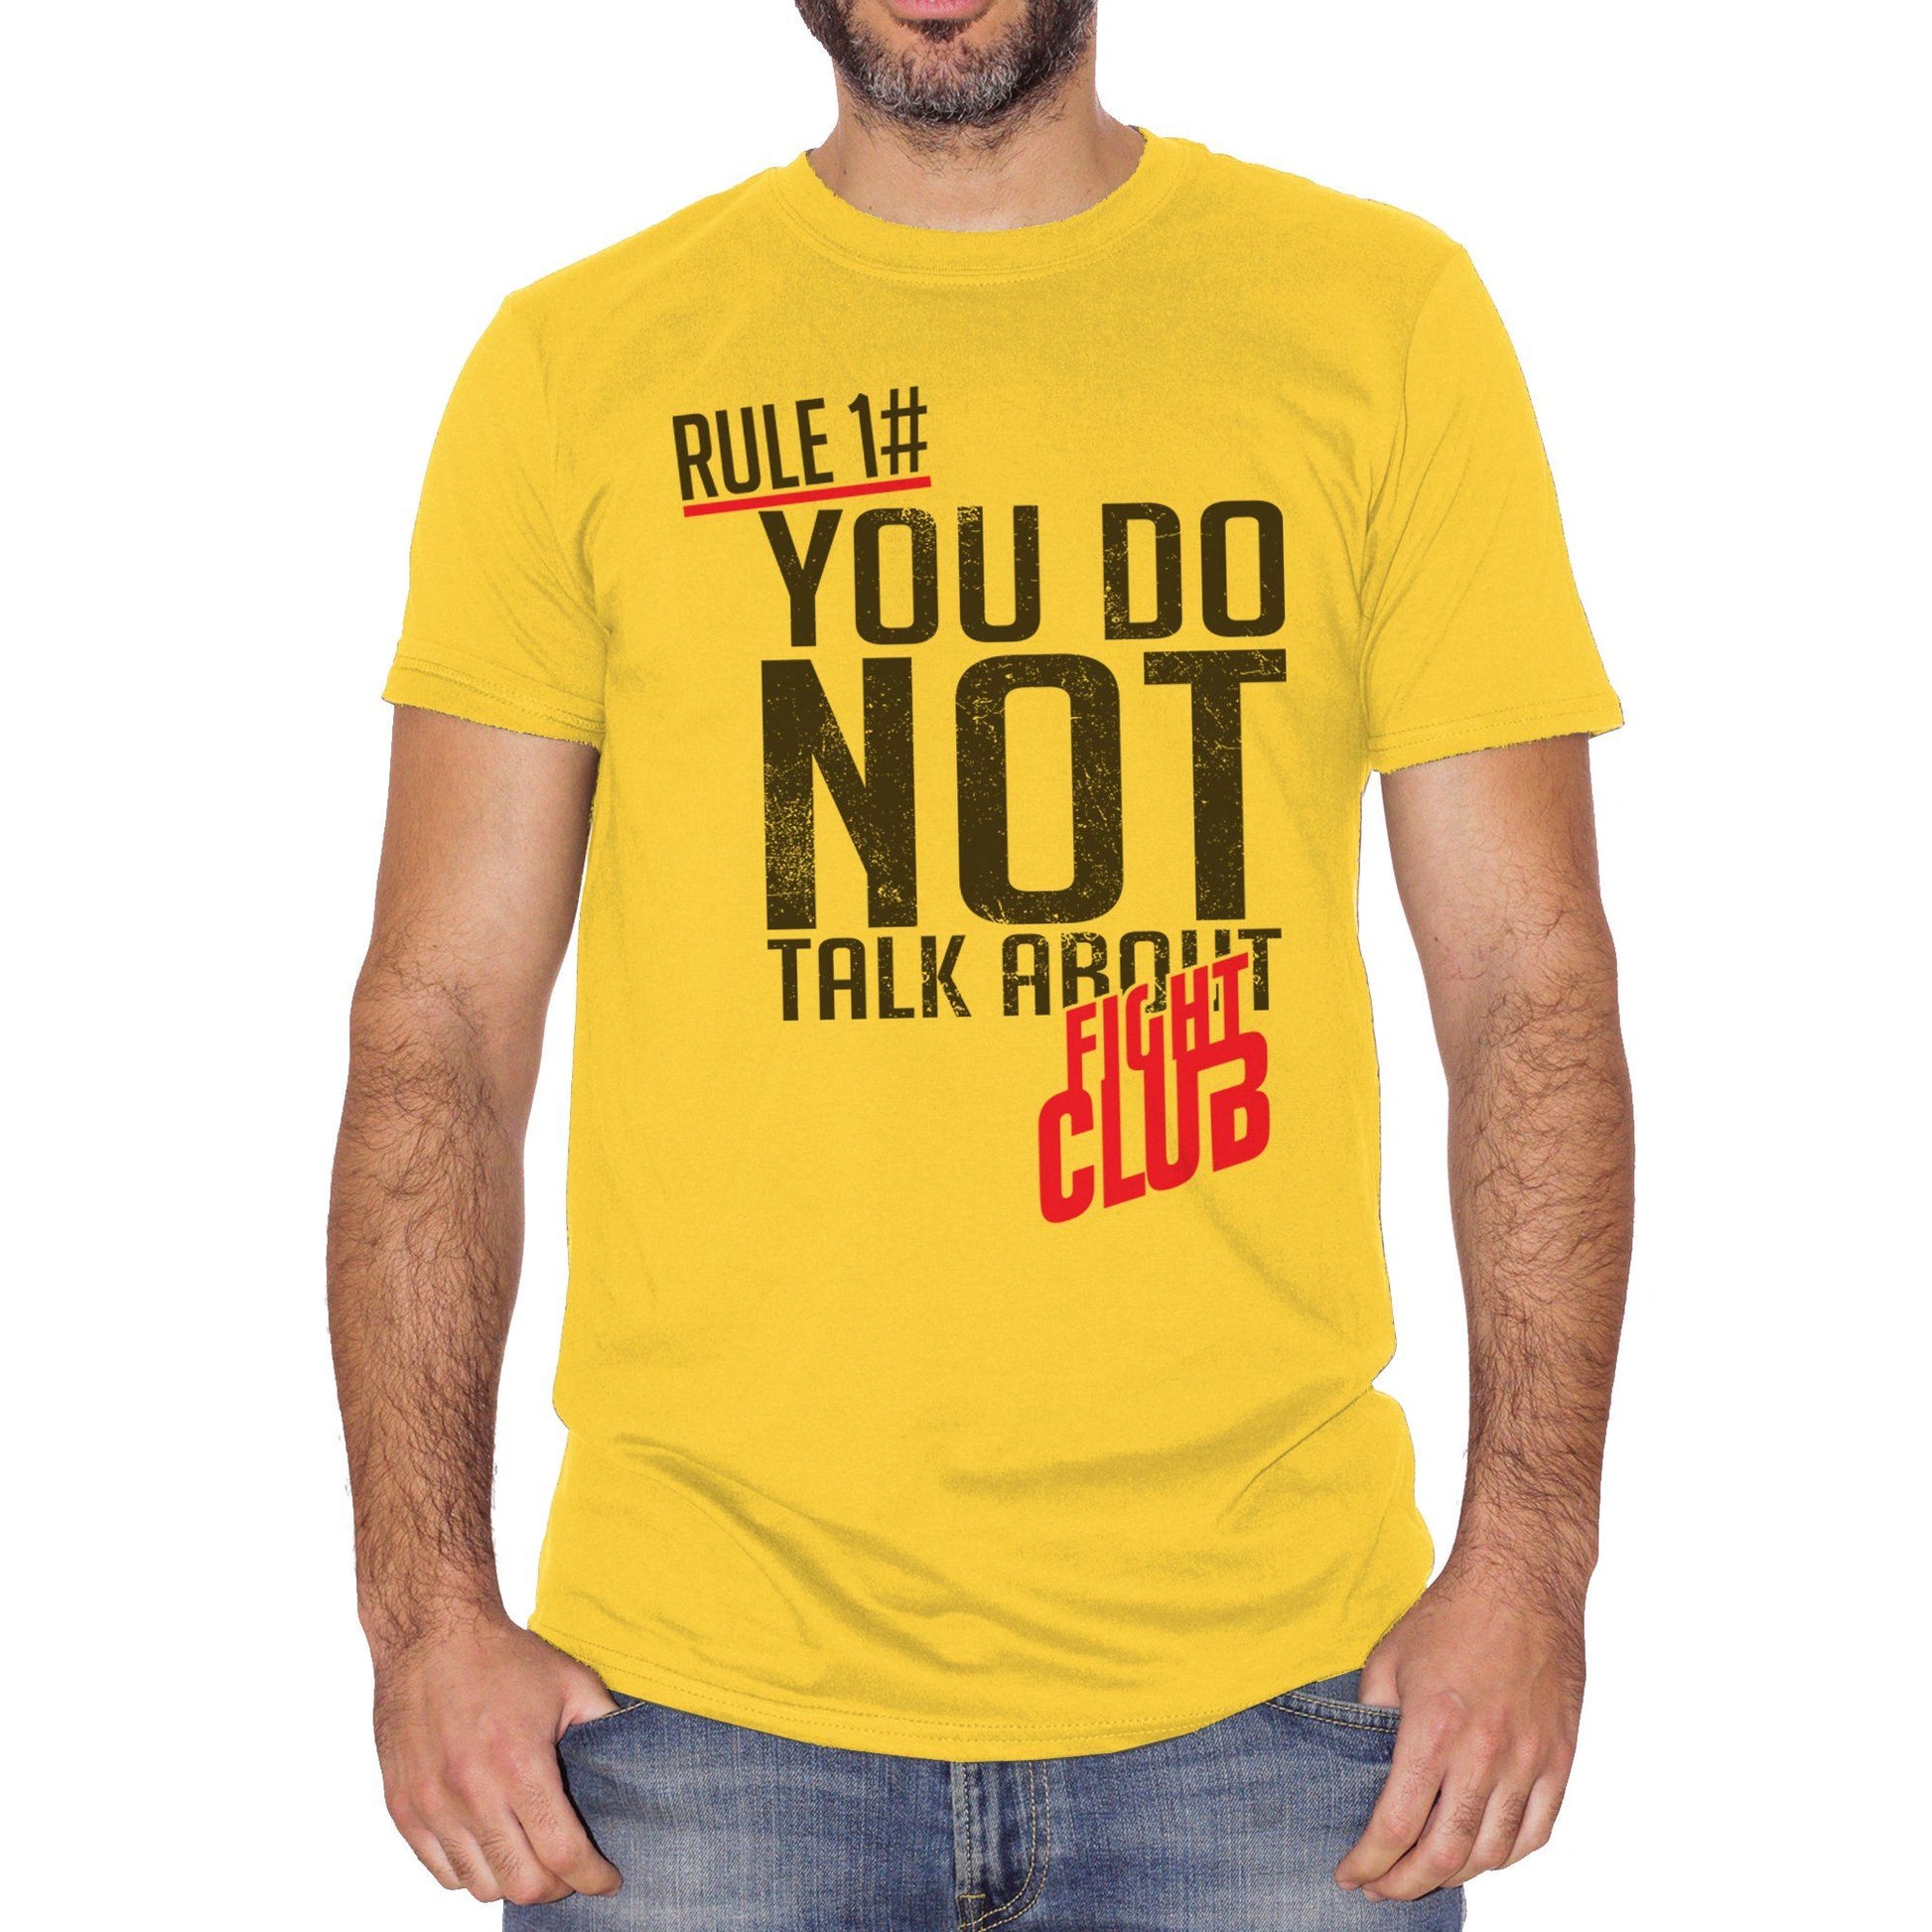 Goldenrod T-Shirt Prima Regola Fight Club Book Libro Pit - FILM CucShop